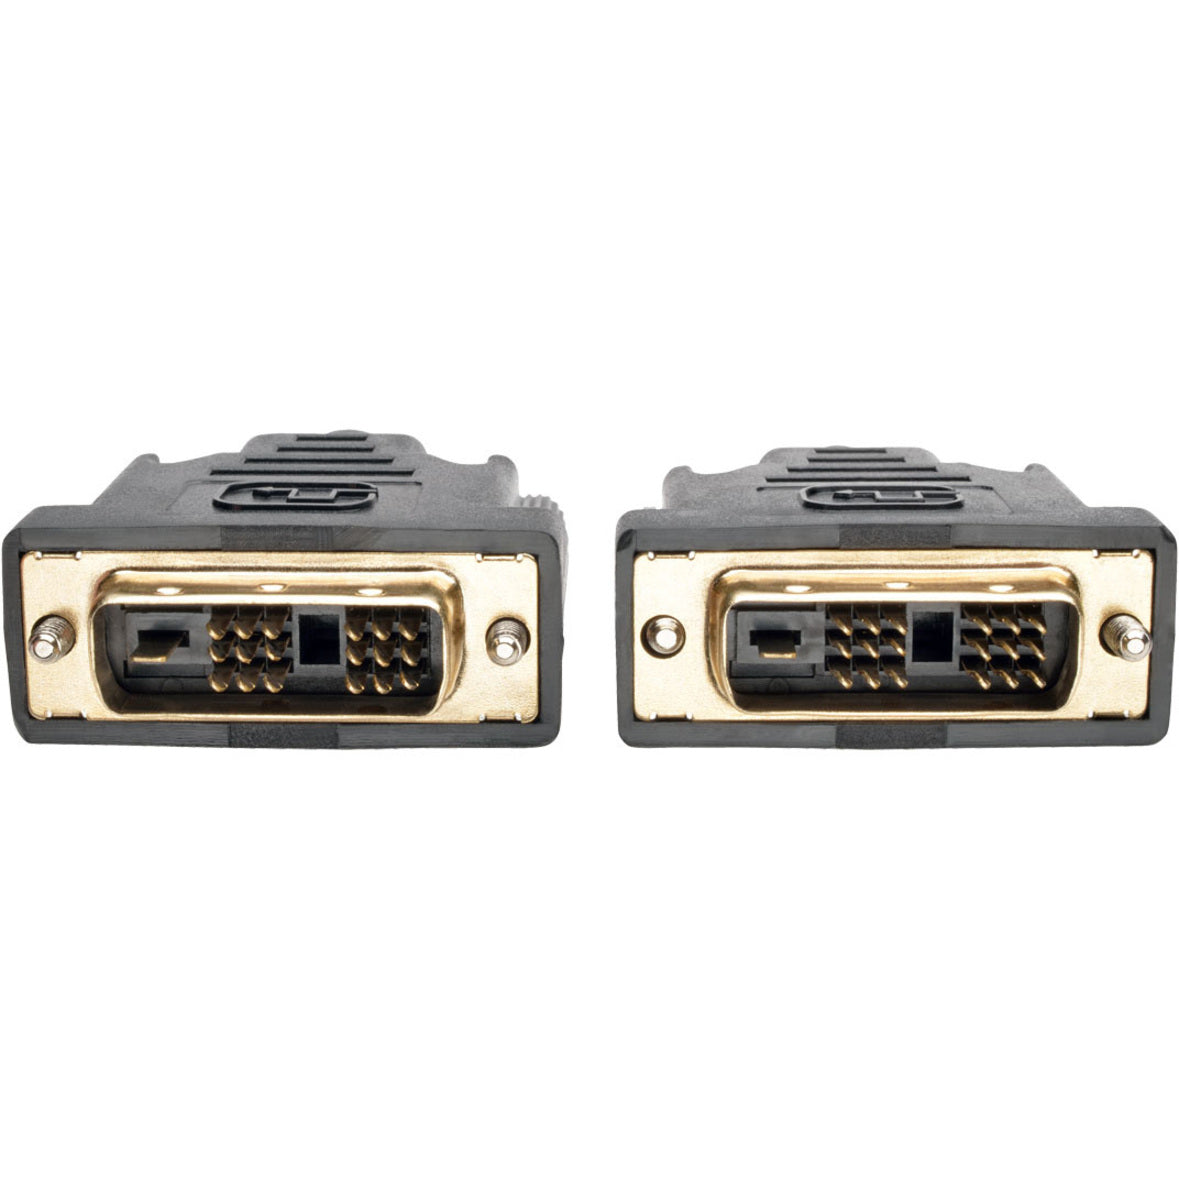 Tripp Lite P561-020 DVI-D Video Cable, 20 ft, Molded, Flexible, Gold-Plated Connectors, EMI/RF Protection